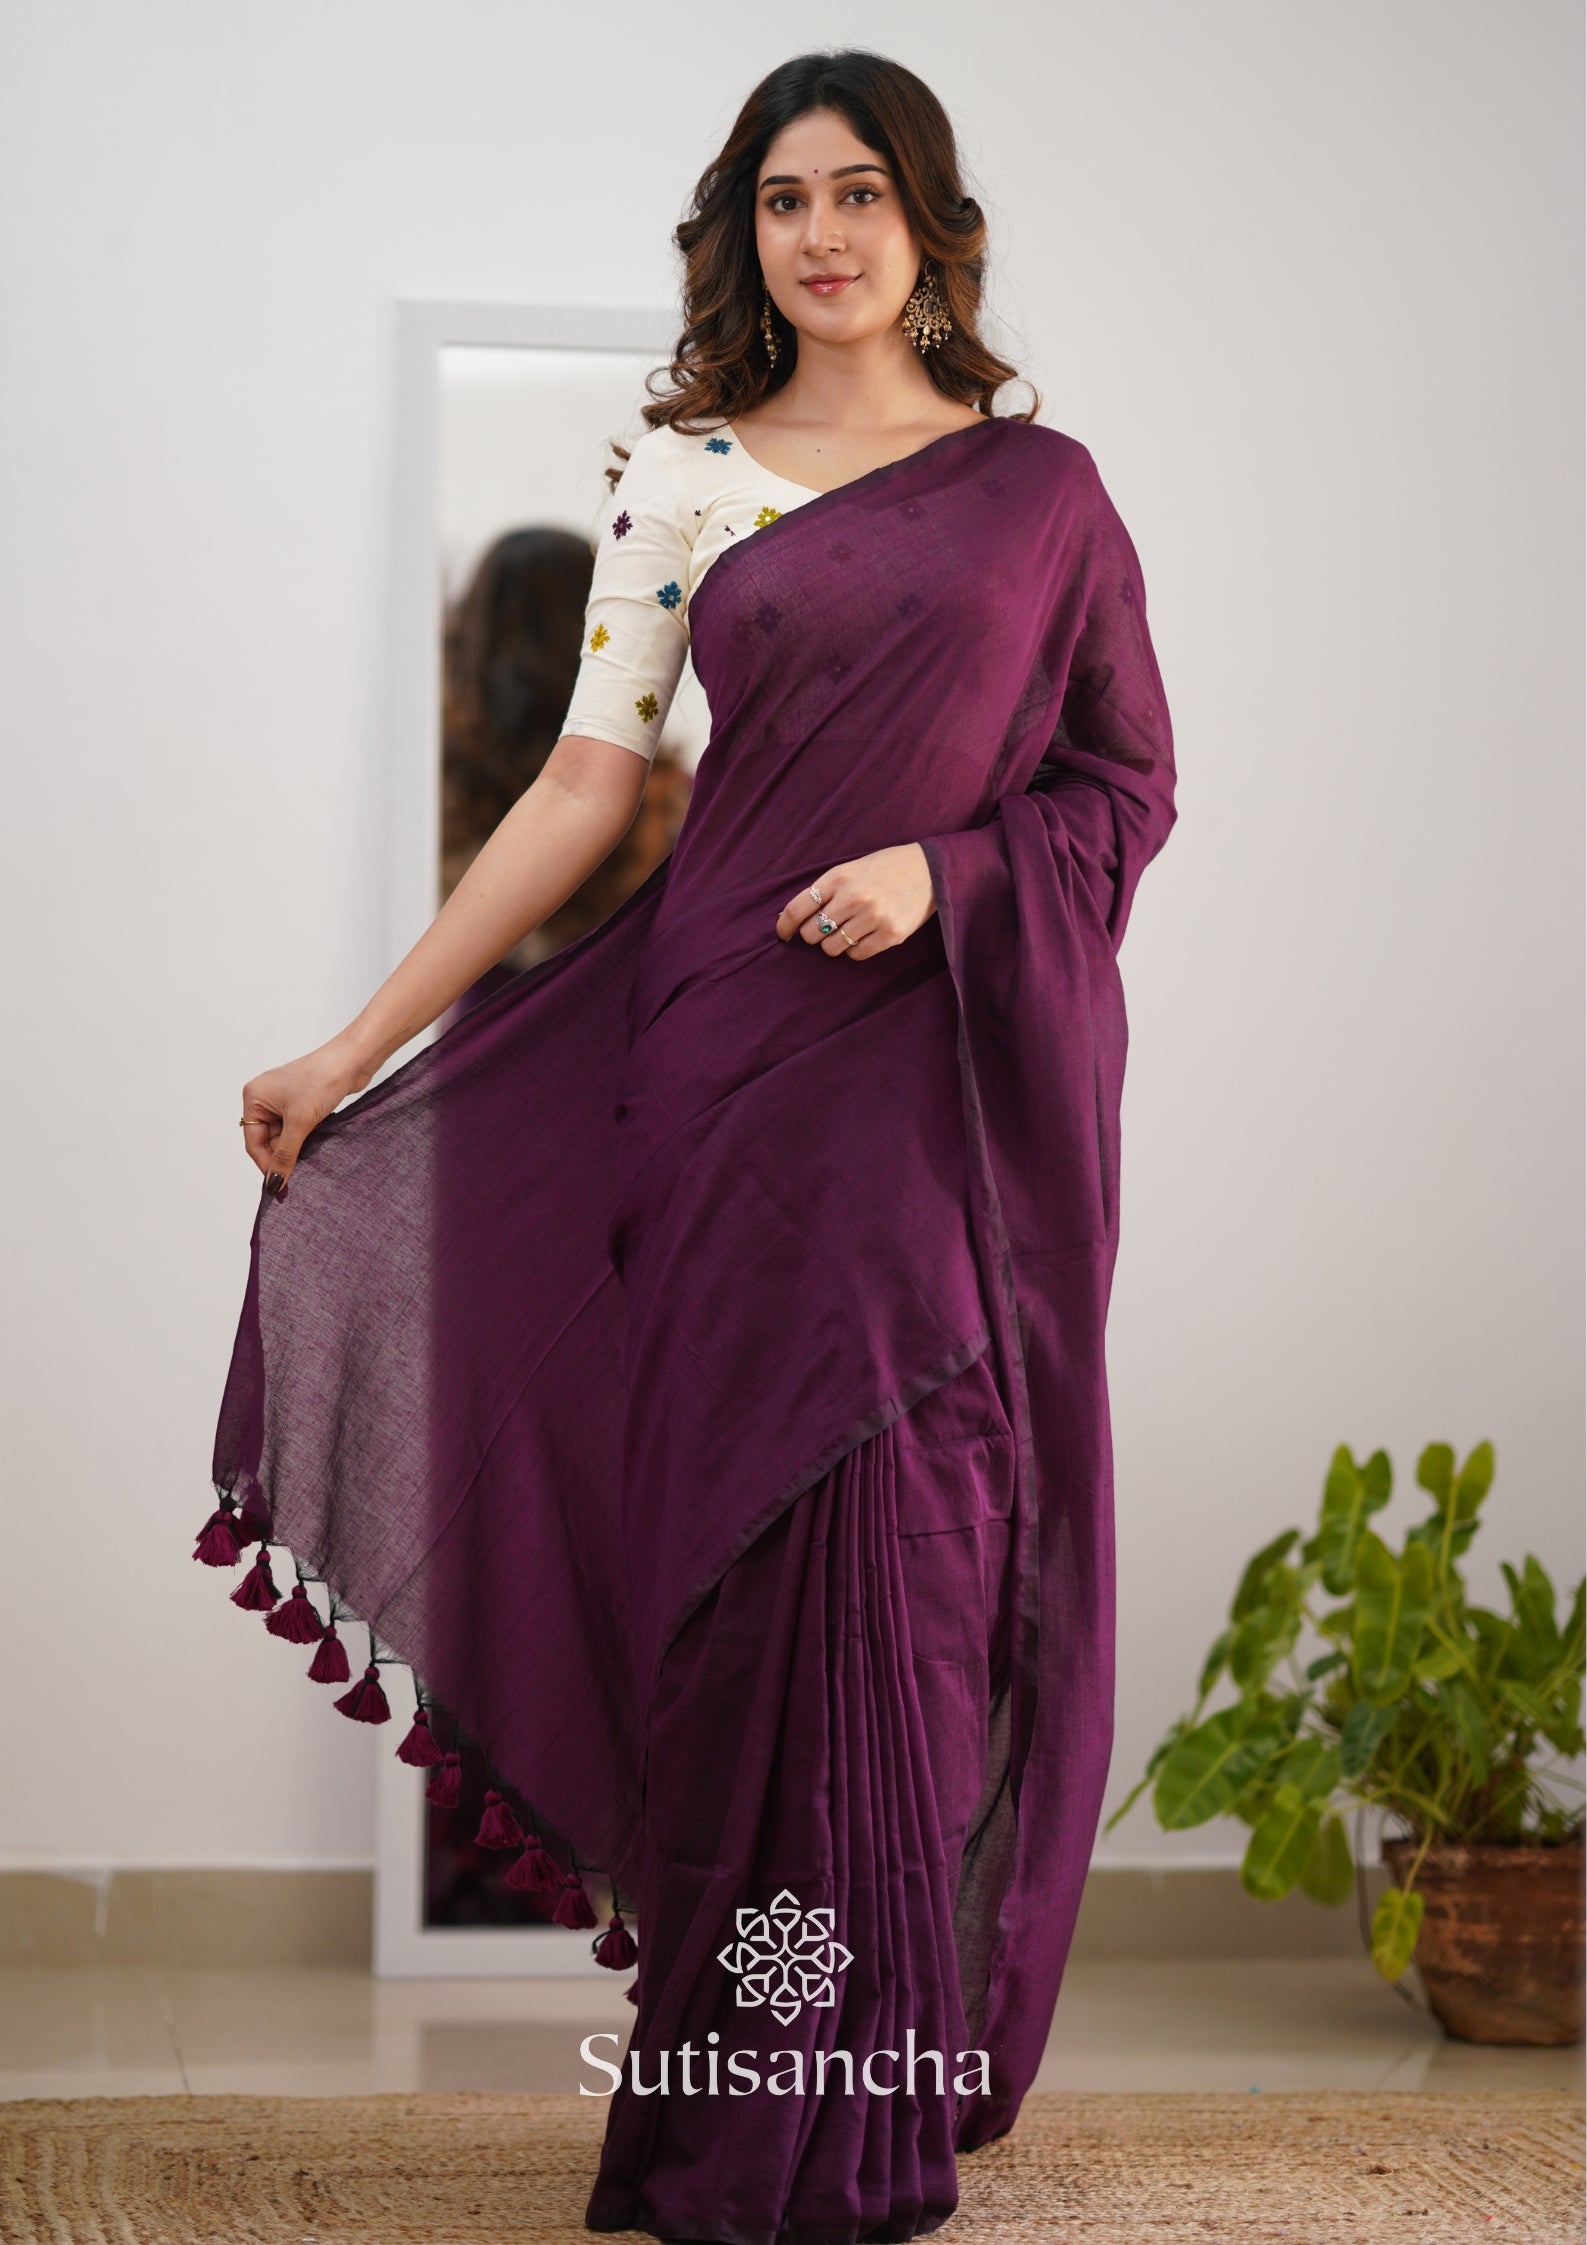 Sutisancha Magenta Handloom Cotton Saree with Designer Blouse